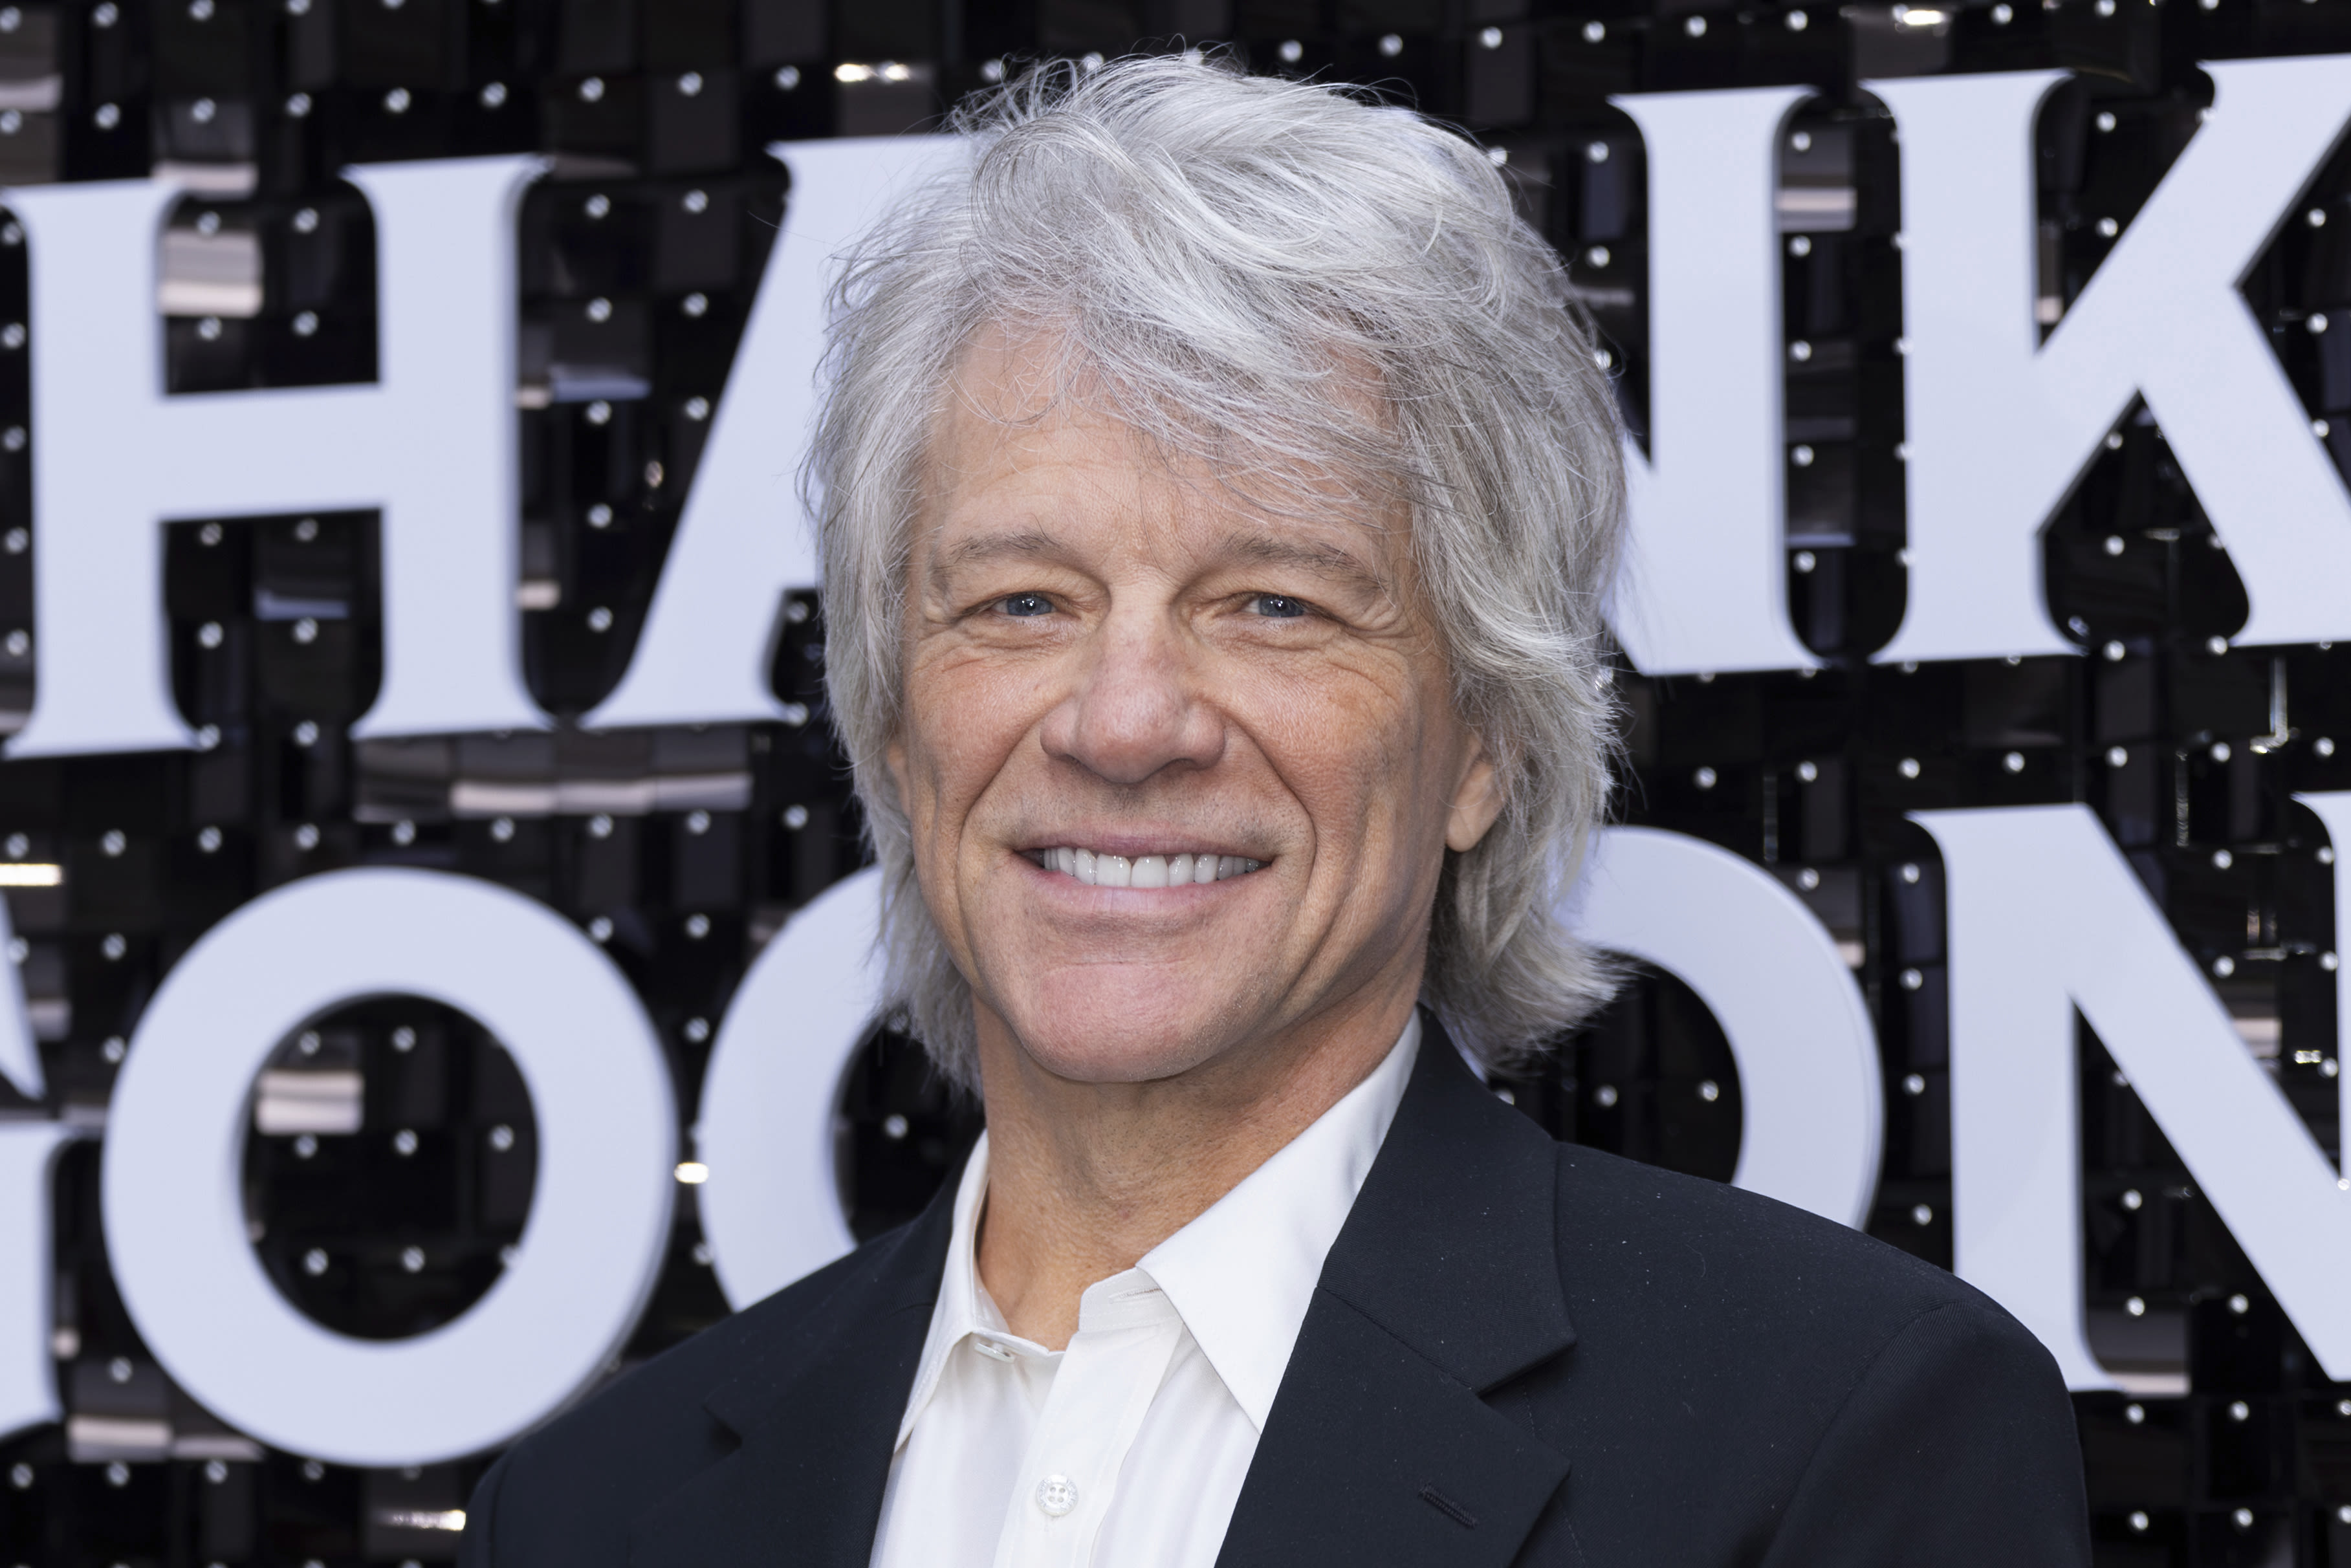 Jon Bon Jovi corrects record on Richie Sambora leaving band: He 'chose not to come back'